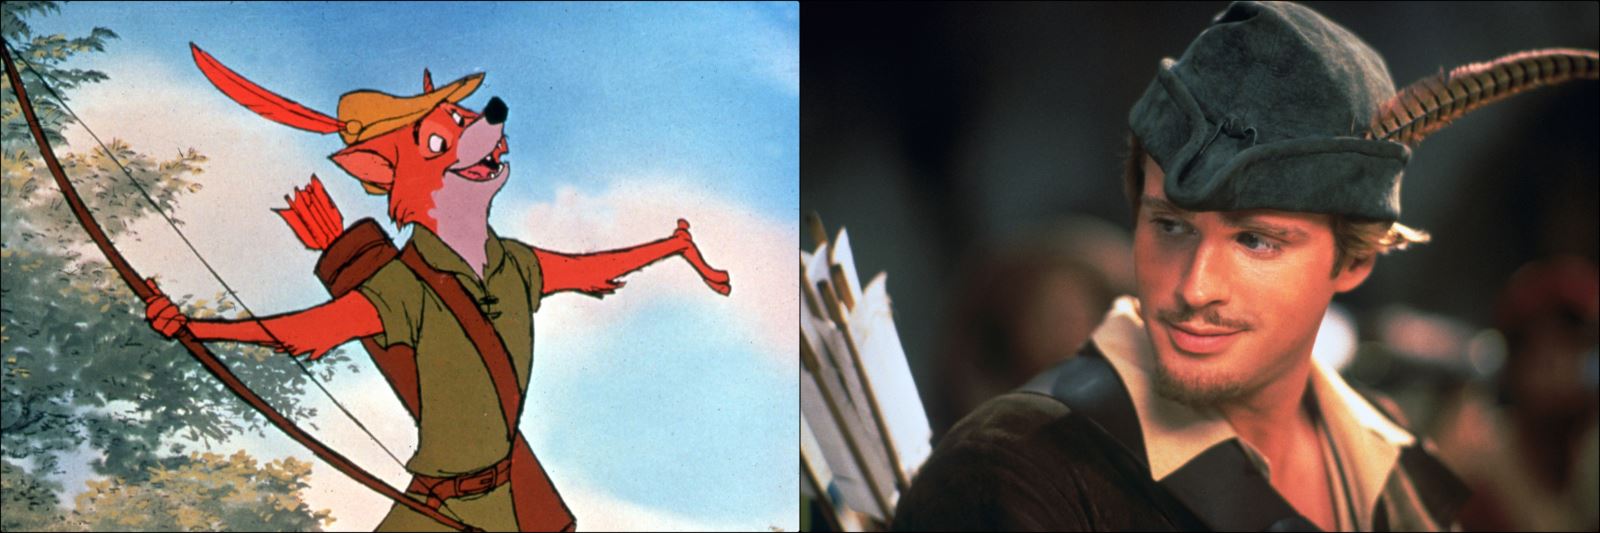 Robin Hood Movie Collage 